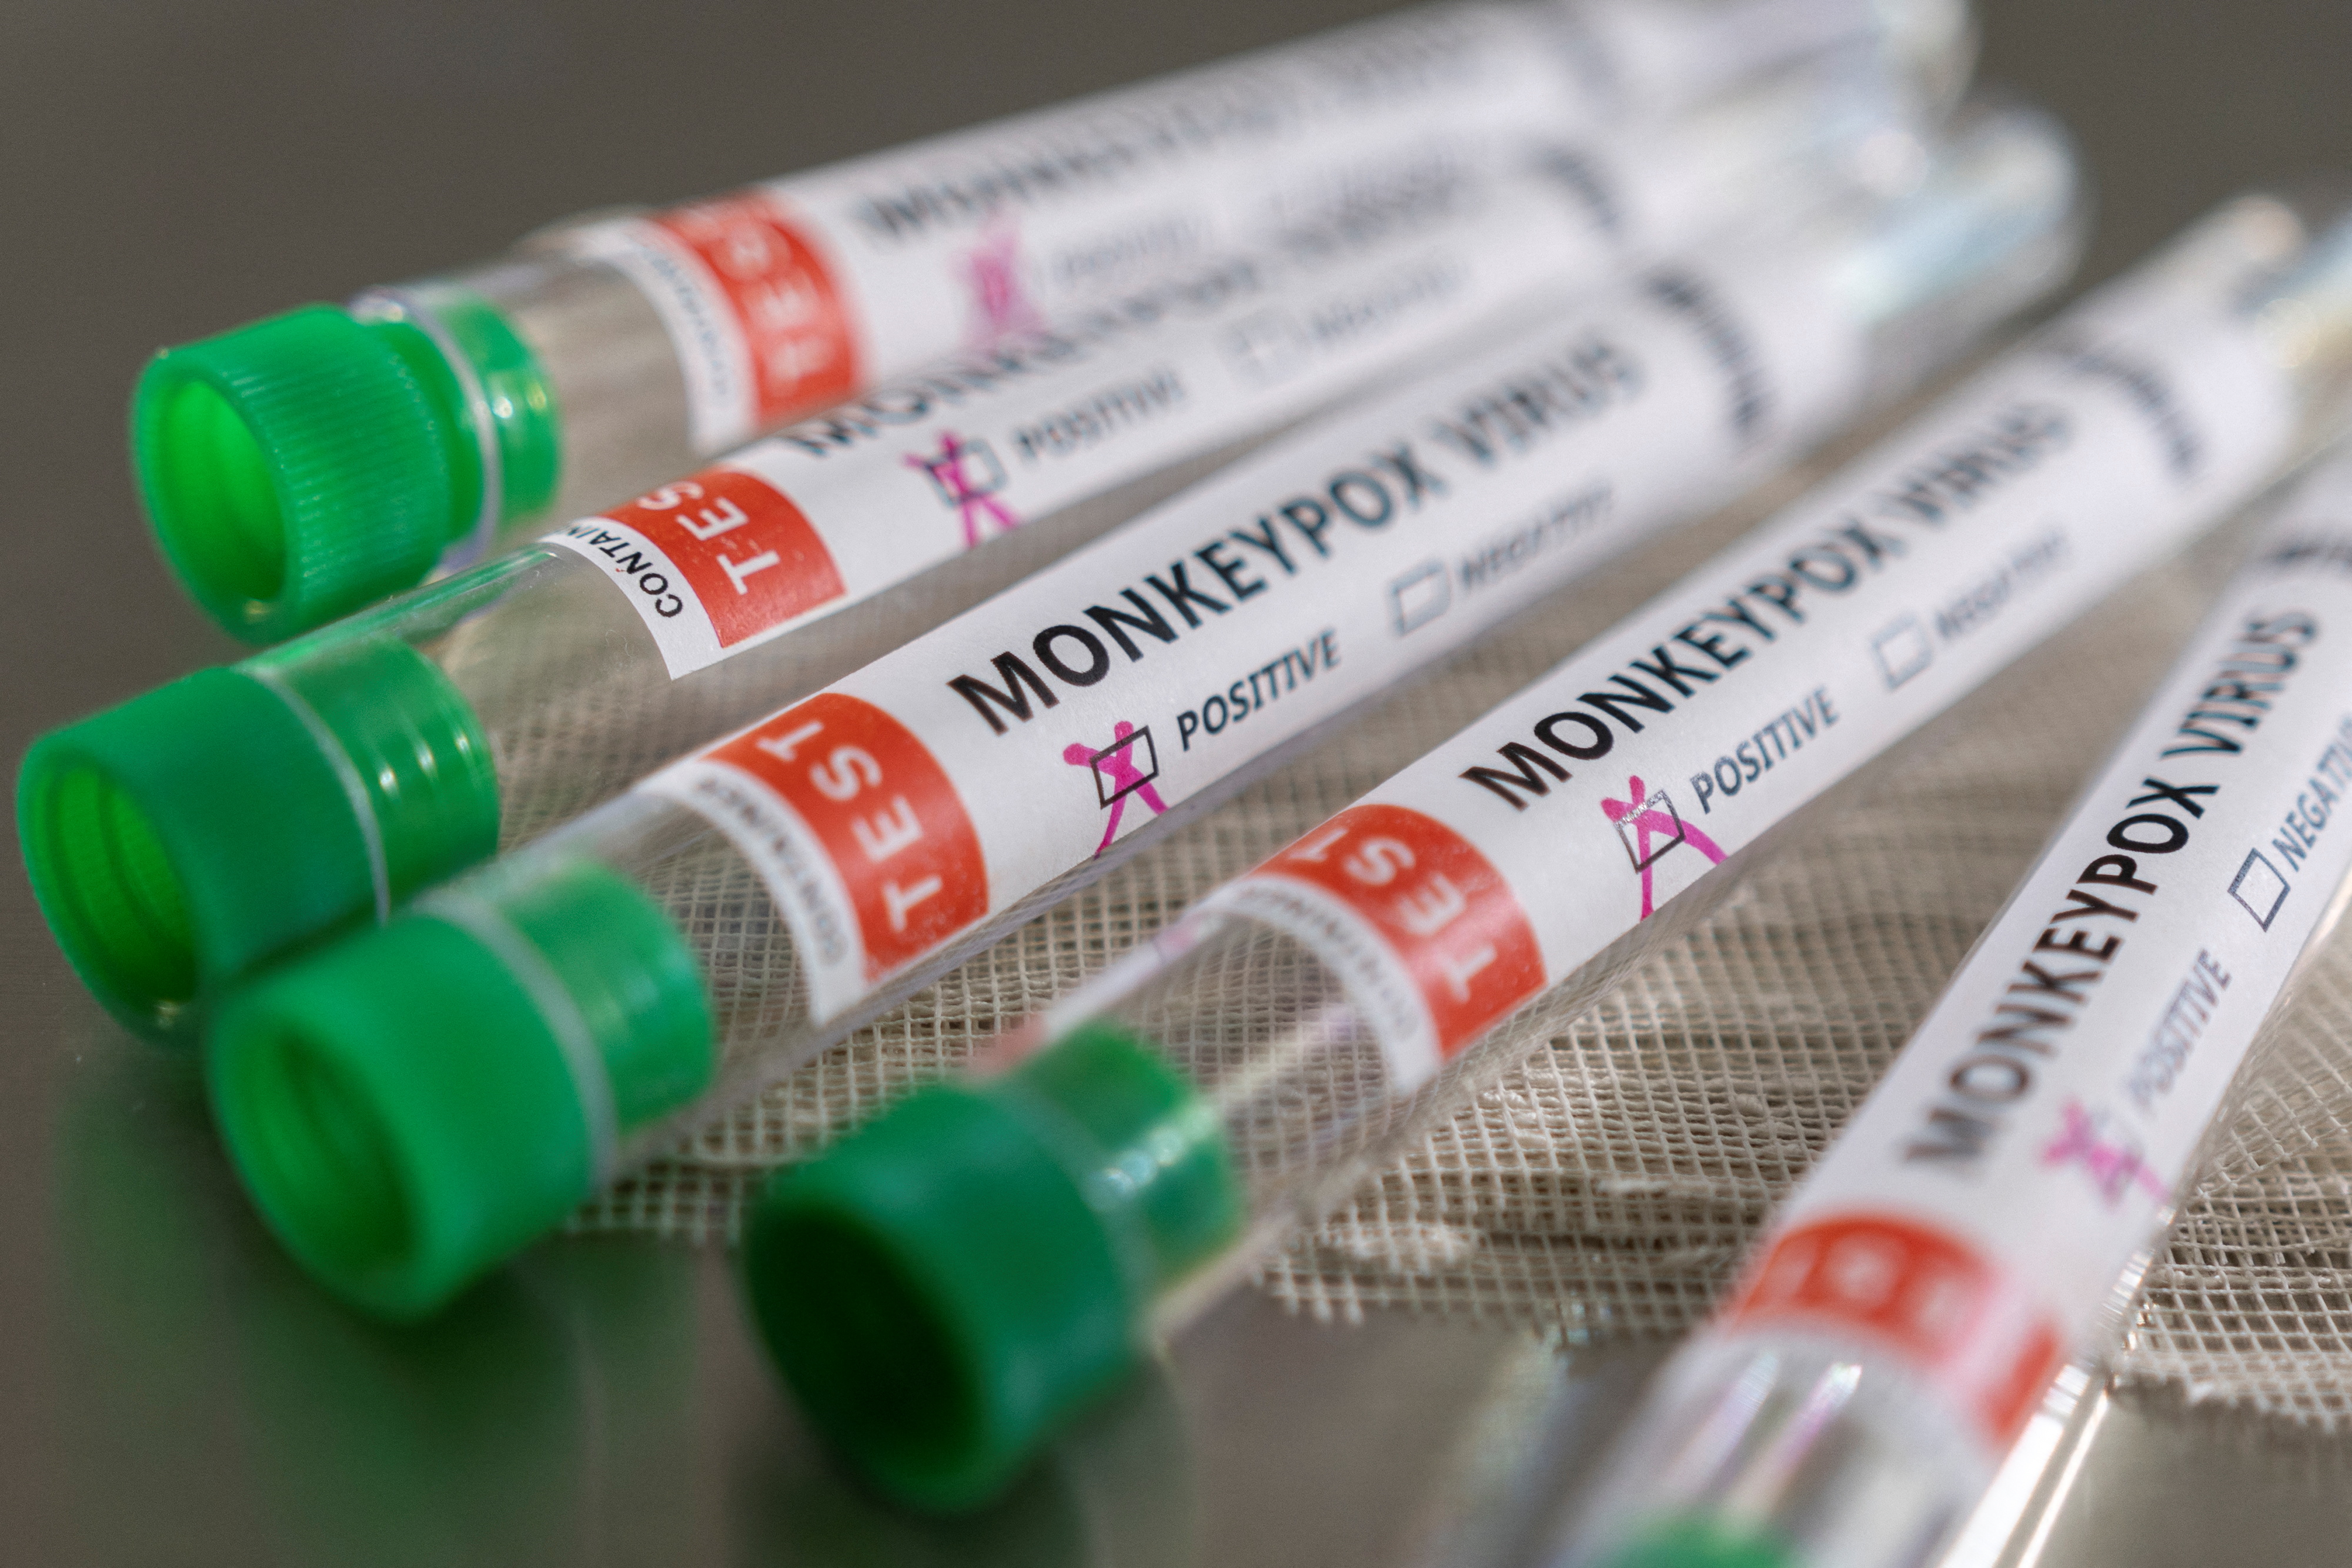 Illustration shows test tubes labelled "Monkeypox virus positive\